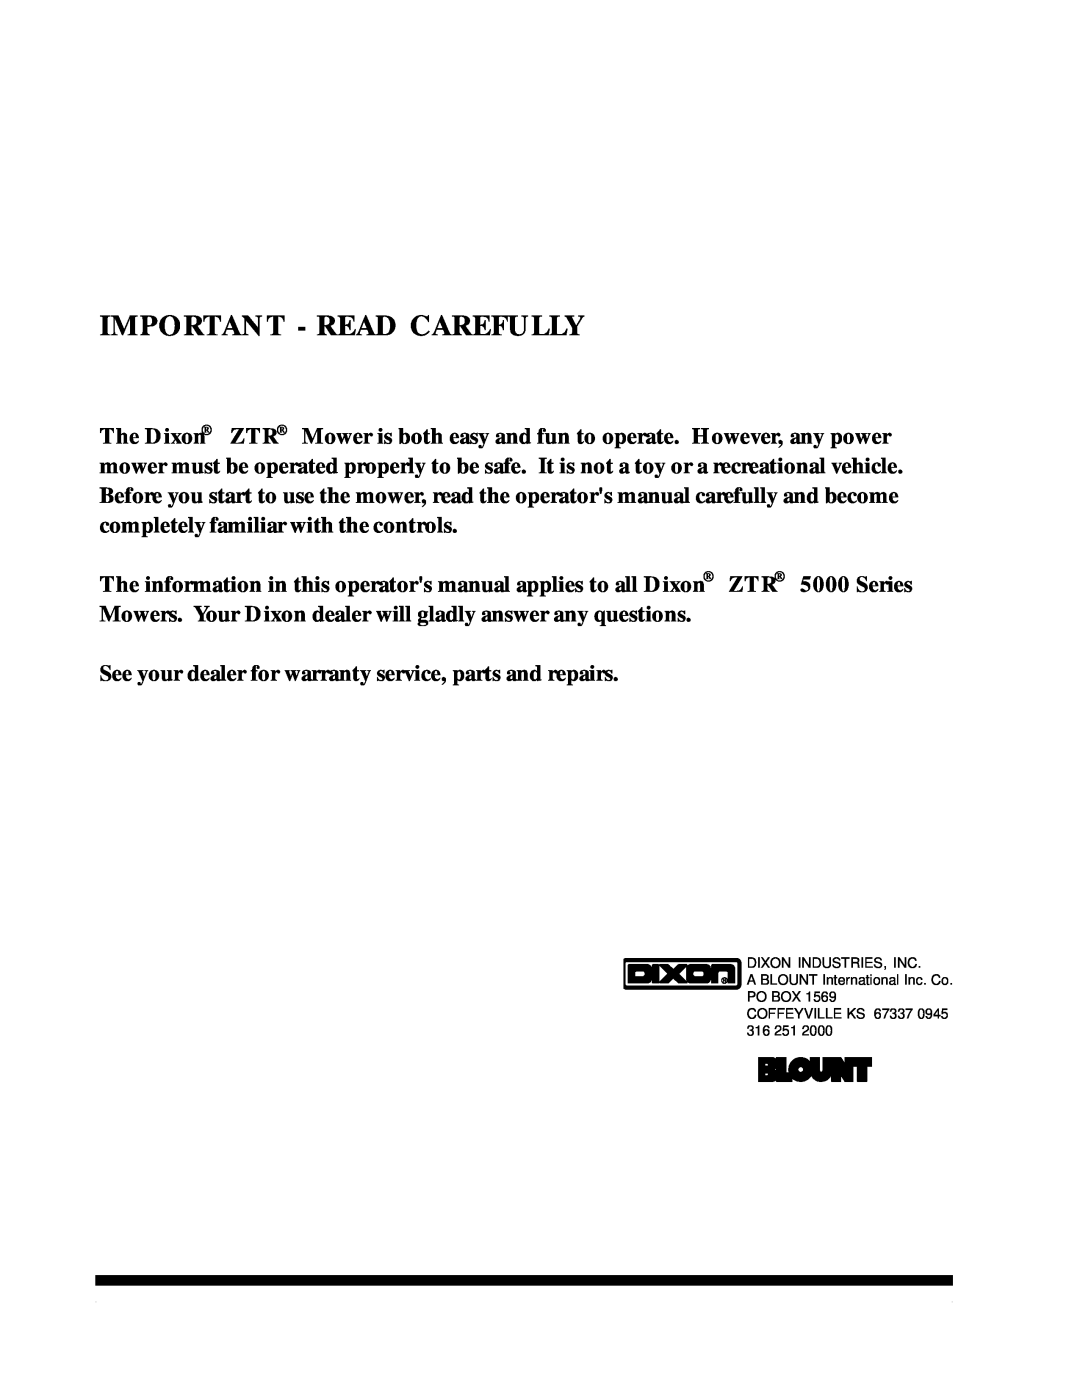 Dixon ZTR 5017Twin manual Important - Read Carefully 